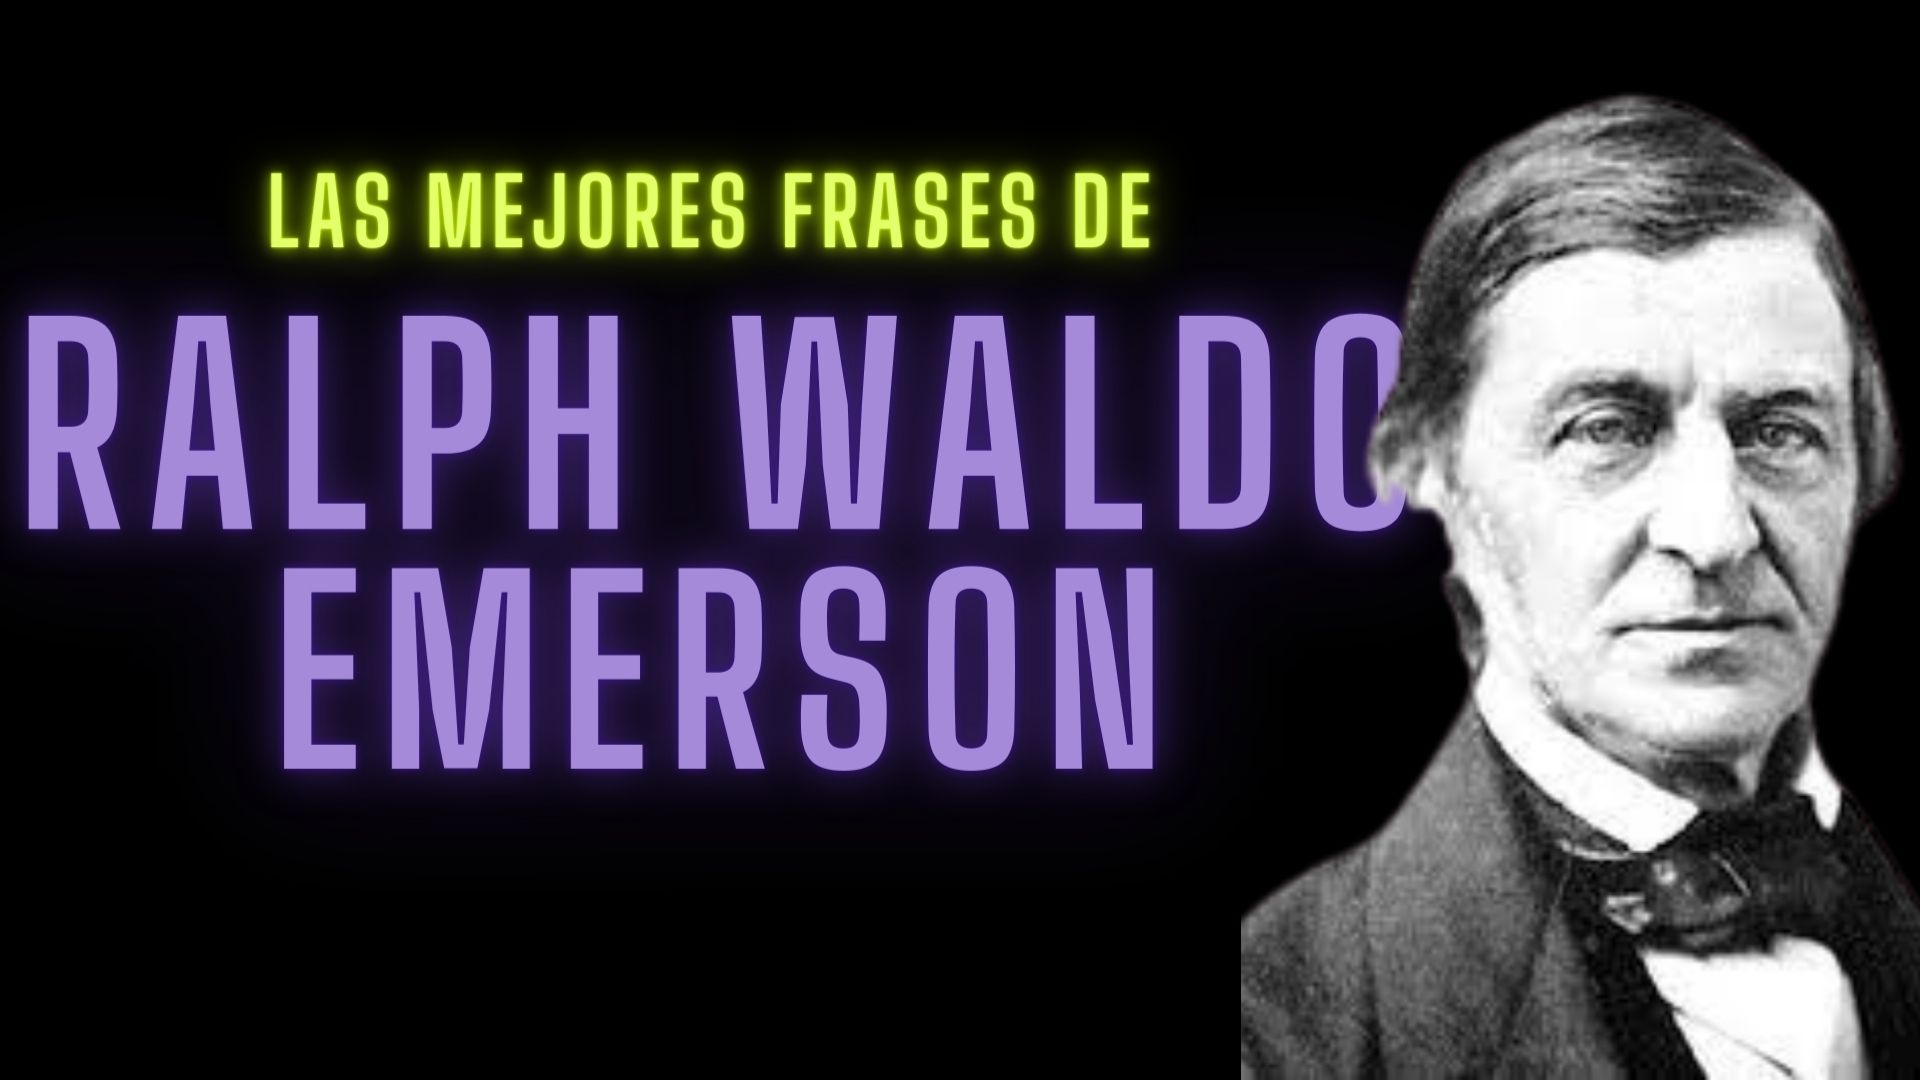 Ralph-waldo-Emerson-frases